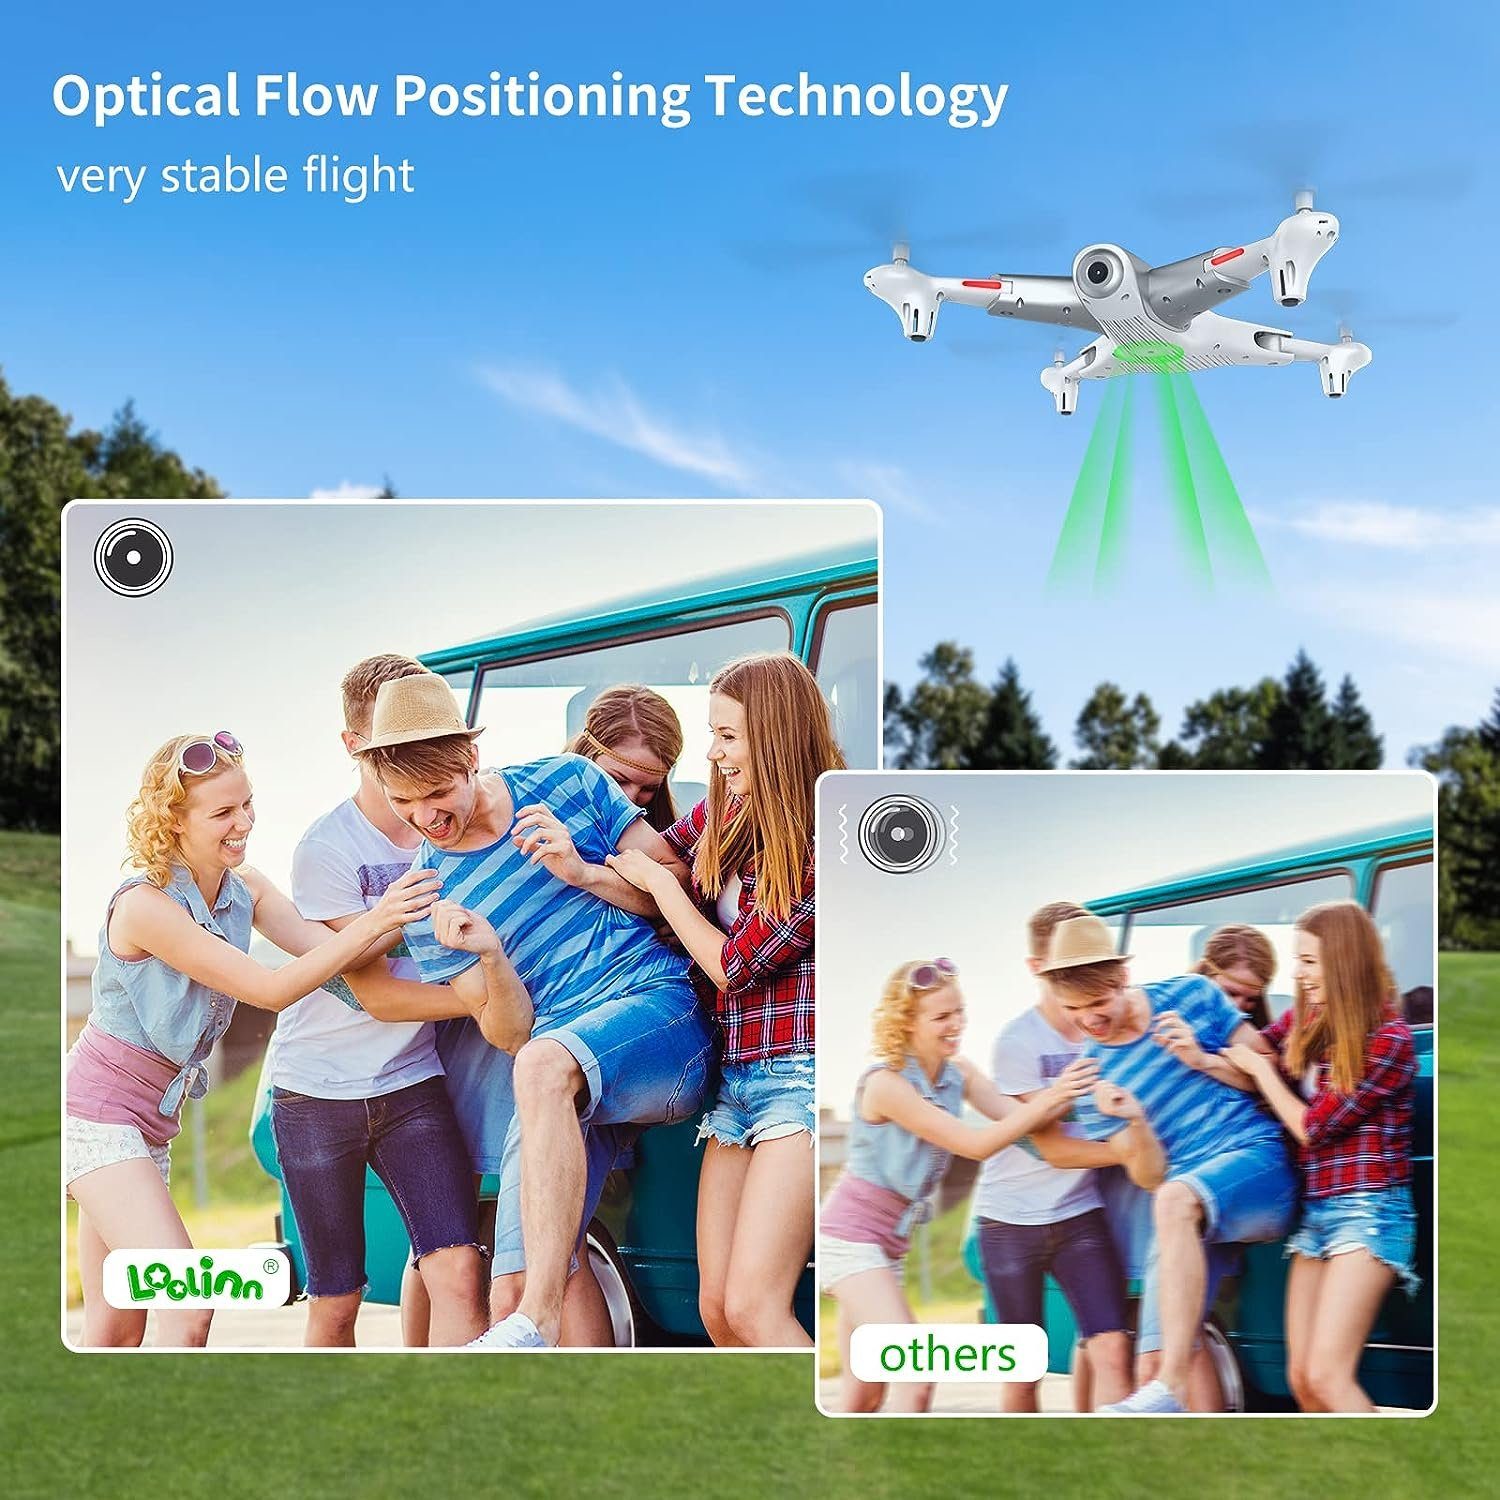 Flusspositionierung 60 (720p, HD) Min Flugzeit Loolinn Drohne Optische Kameradrohne